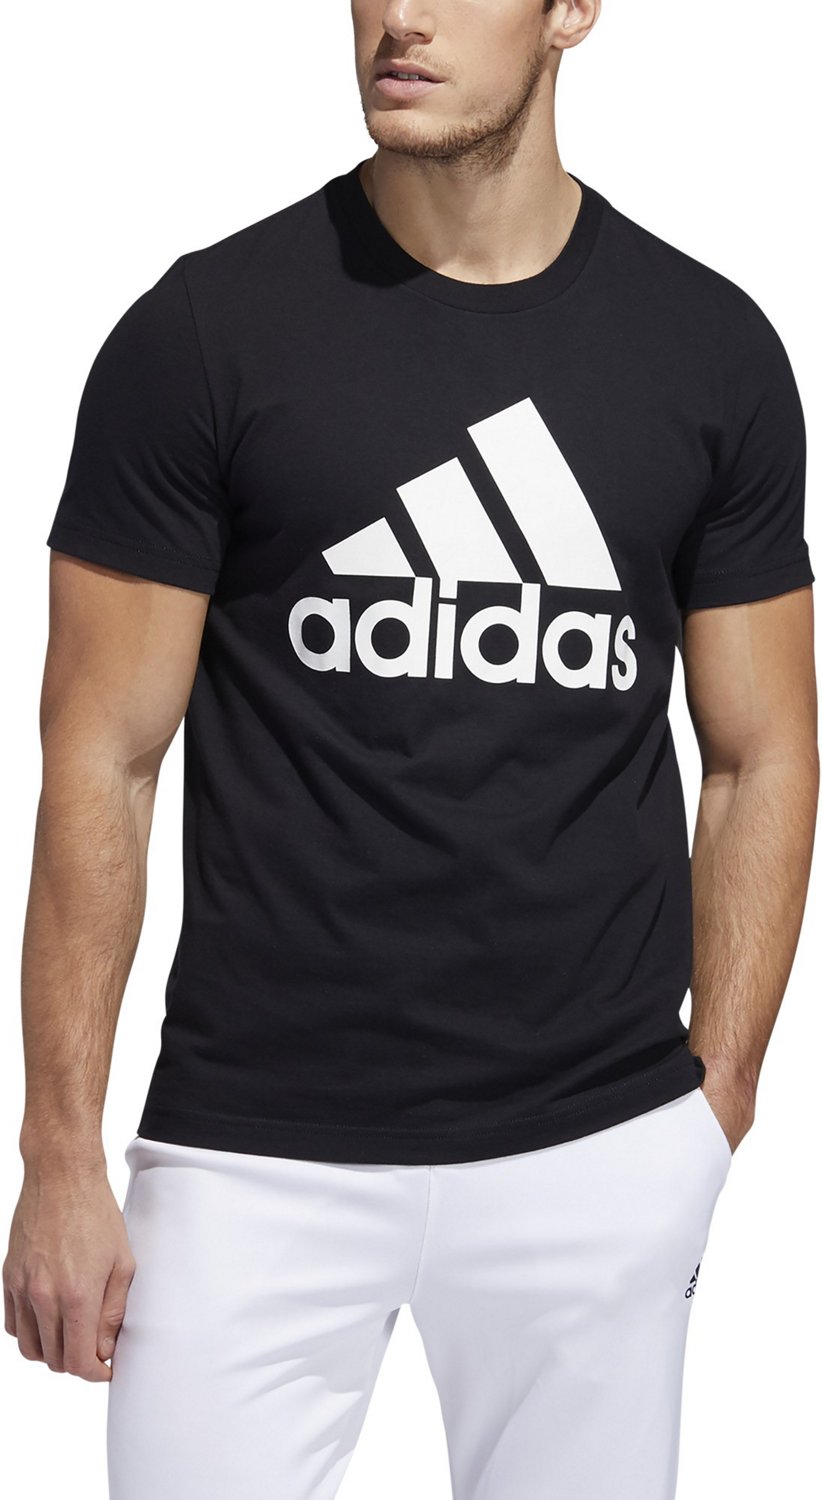 adidas 3x t shirts